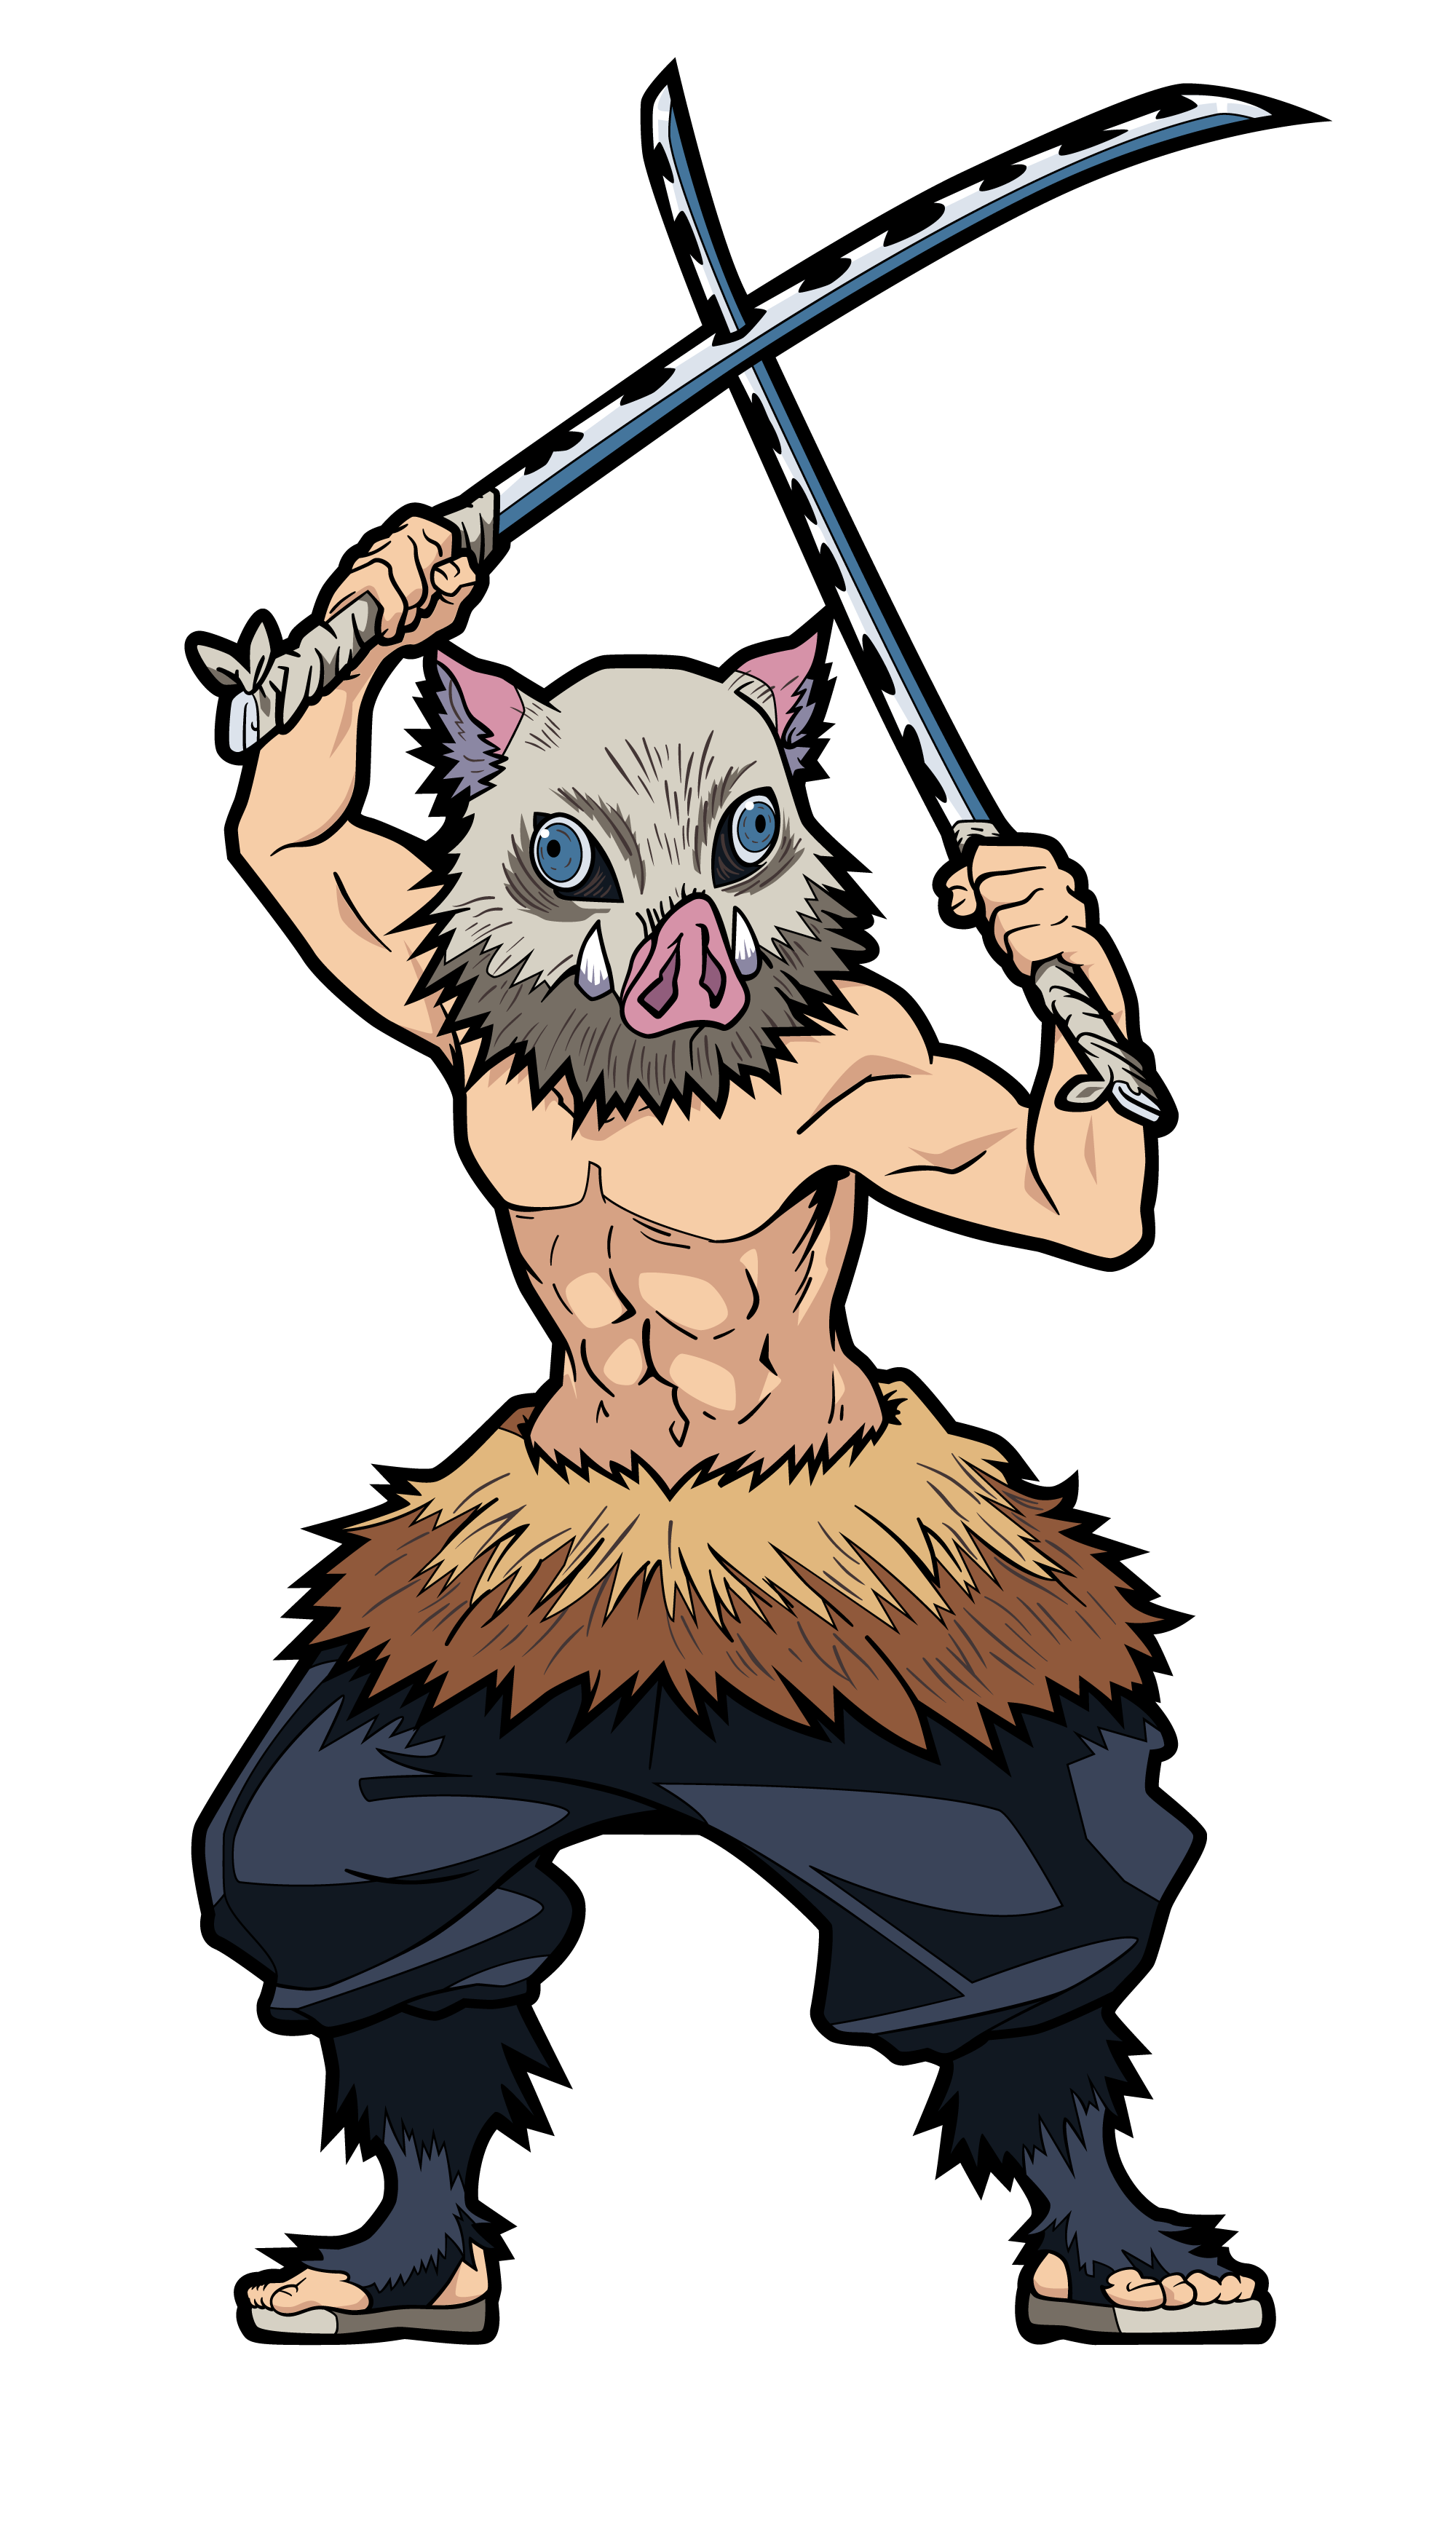 Demon Slayer: Shinobu Kocho FiGPiN #490 – Wanted Pops & Collectibles